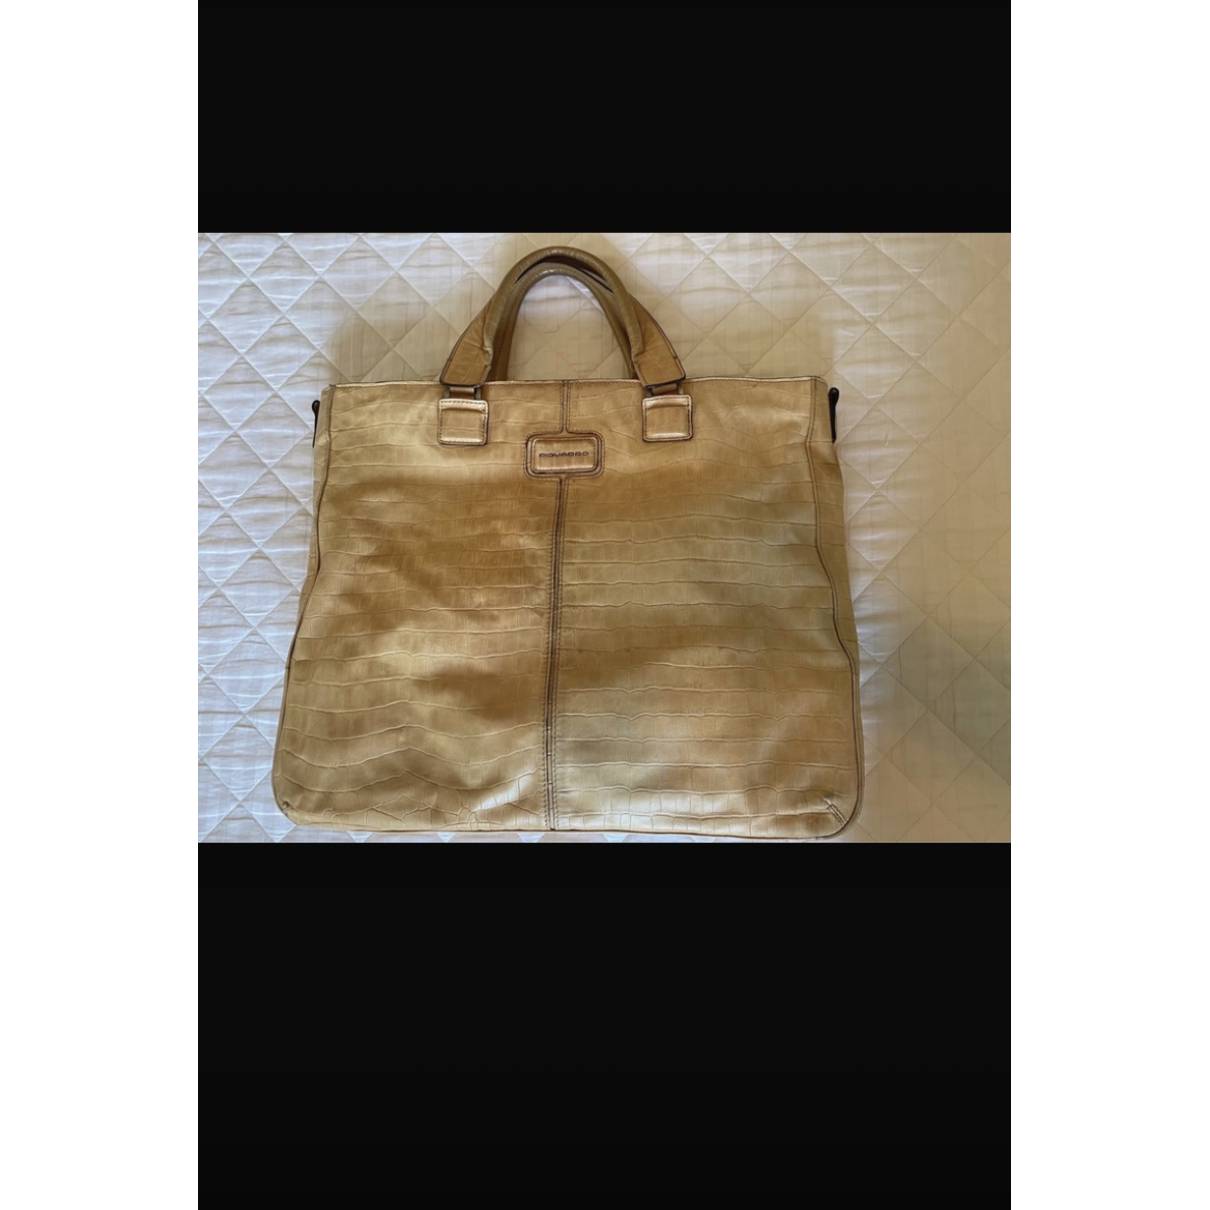 Buy Piquadro Leather travel bag online